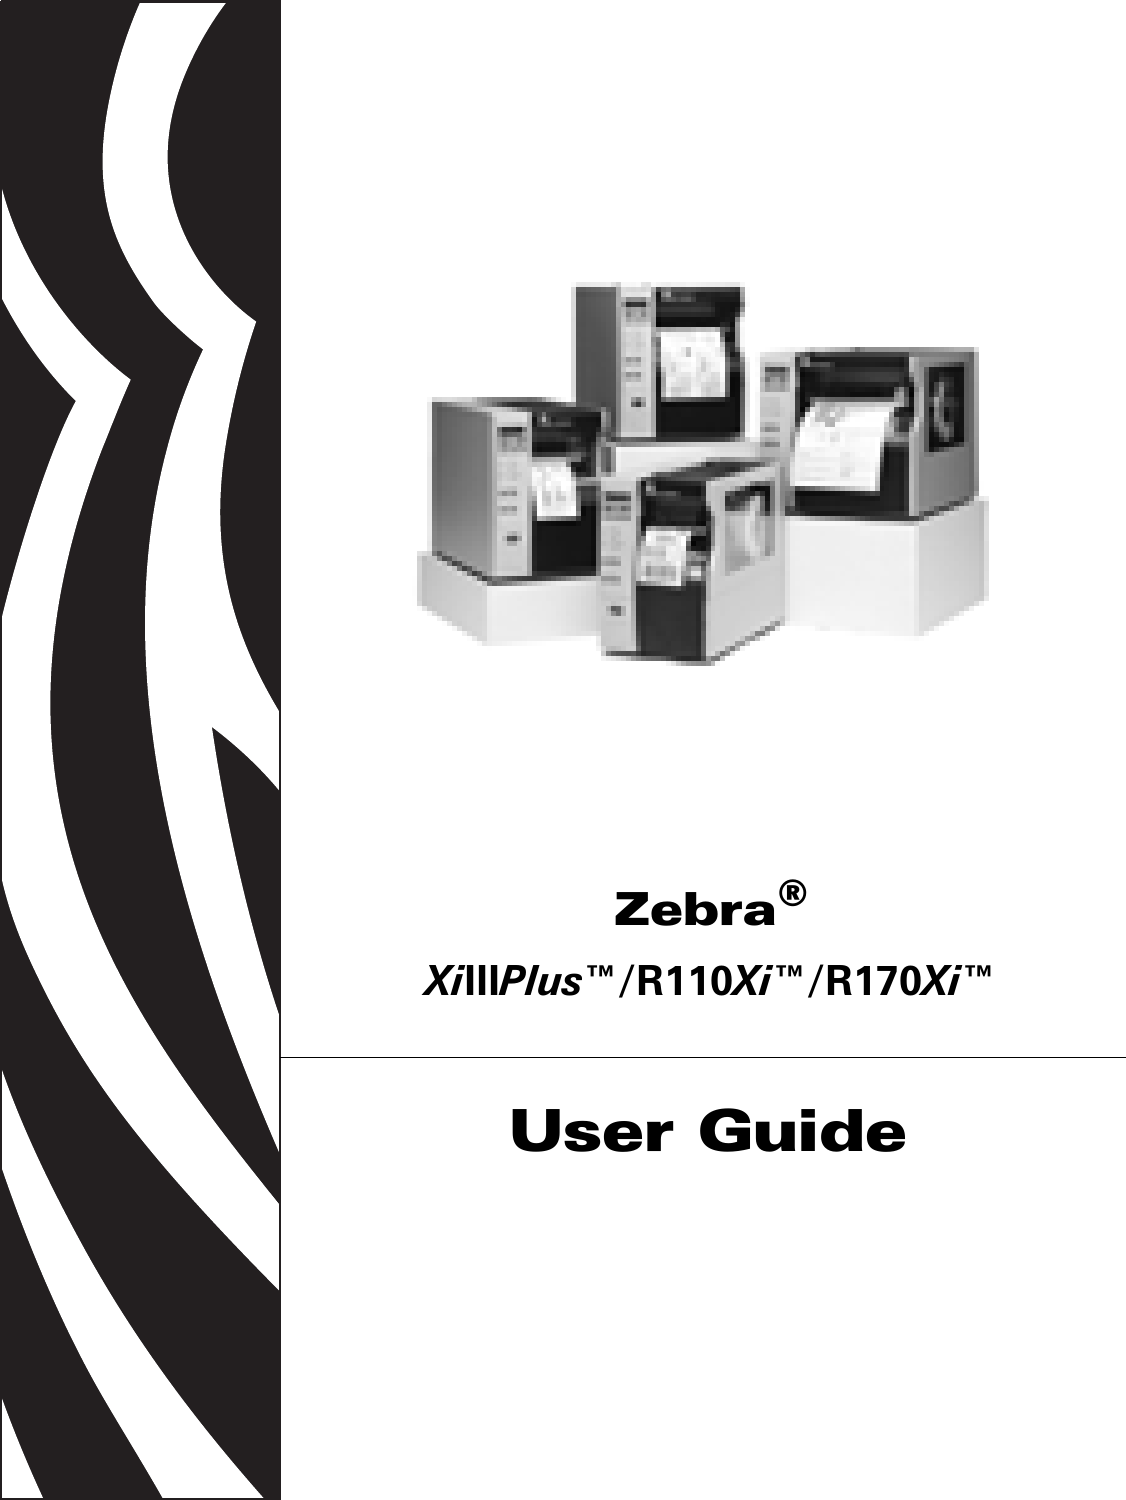  Zebra®XiIIIPlus™/R110Xi™/R170Xi™User Guide